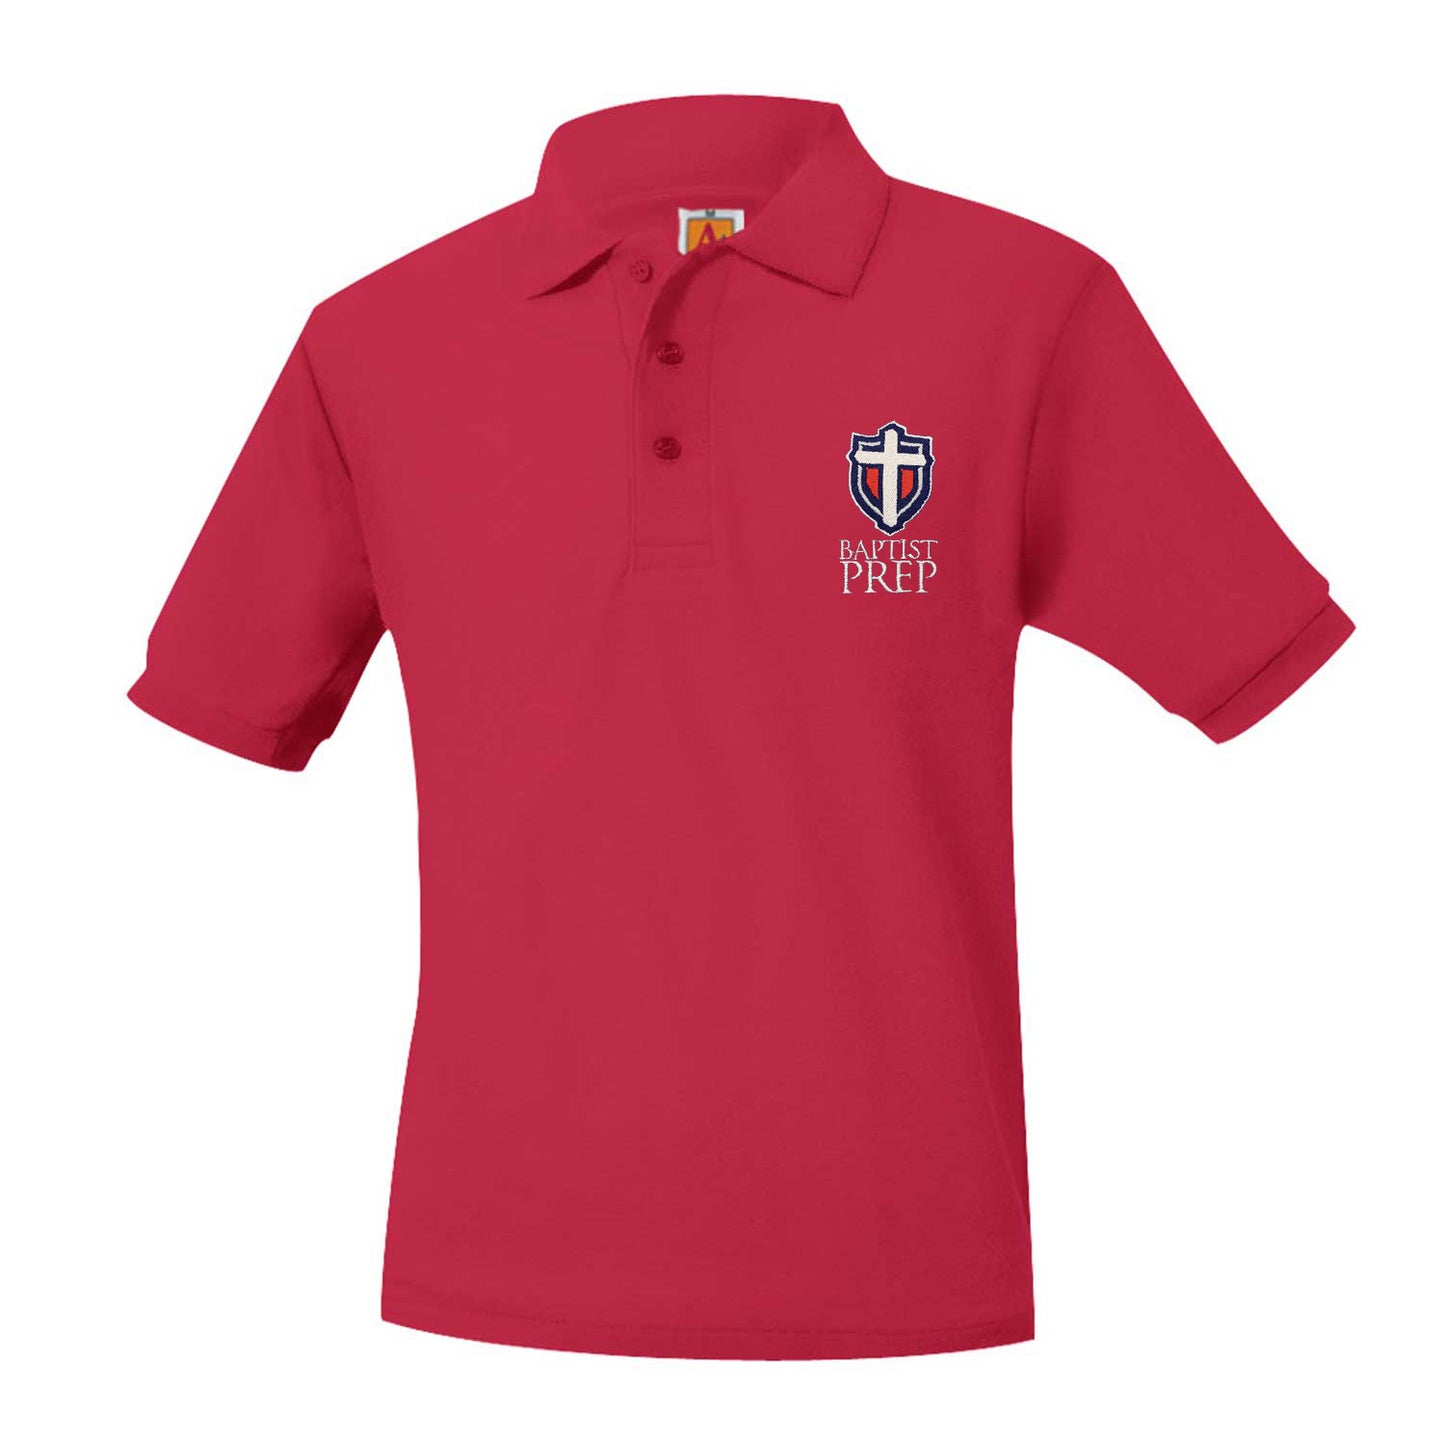 Adult Short Sleeve Pique Polo With Baptist Prep Logo